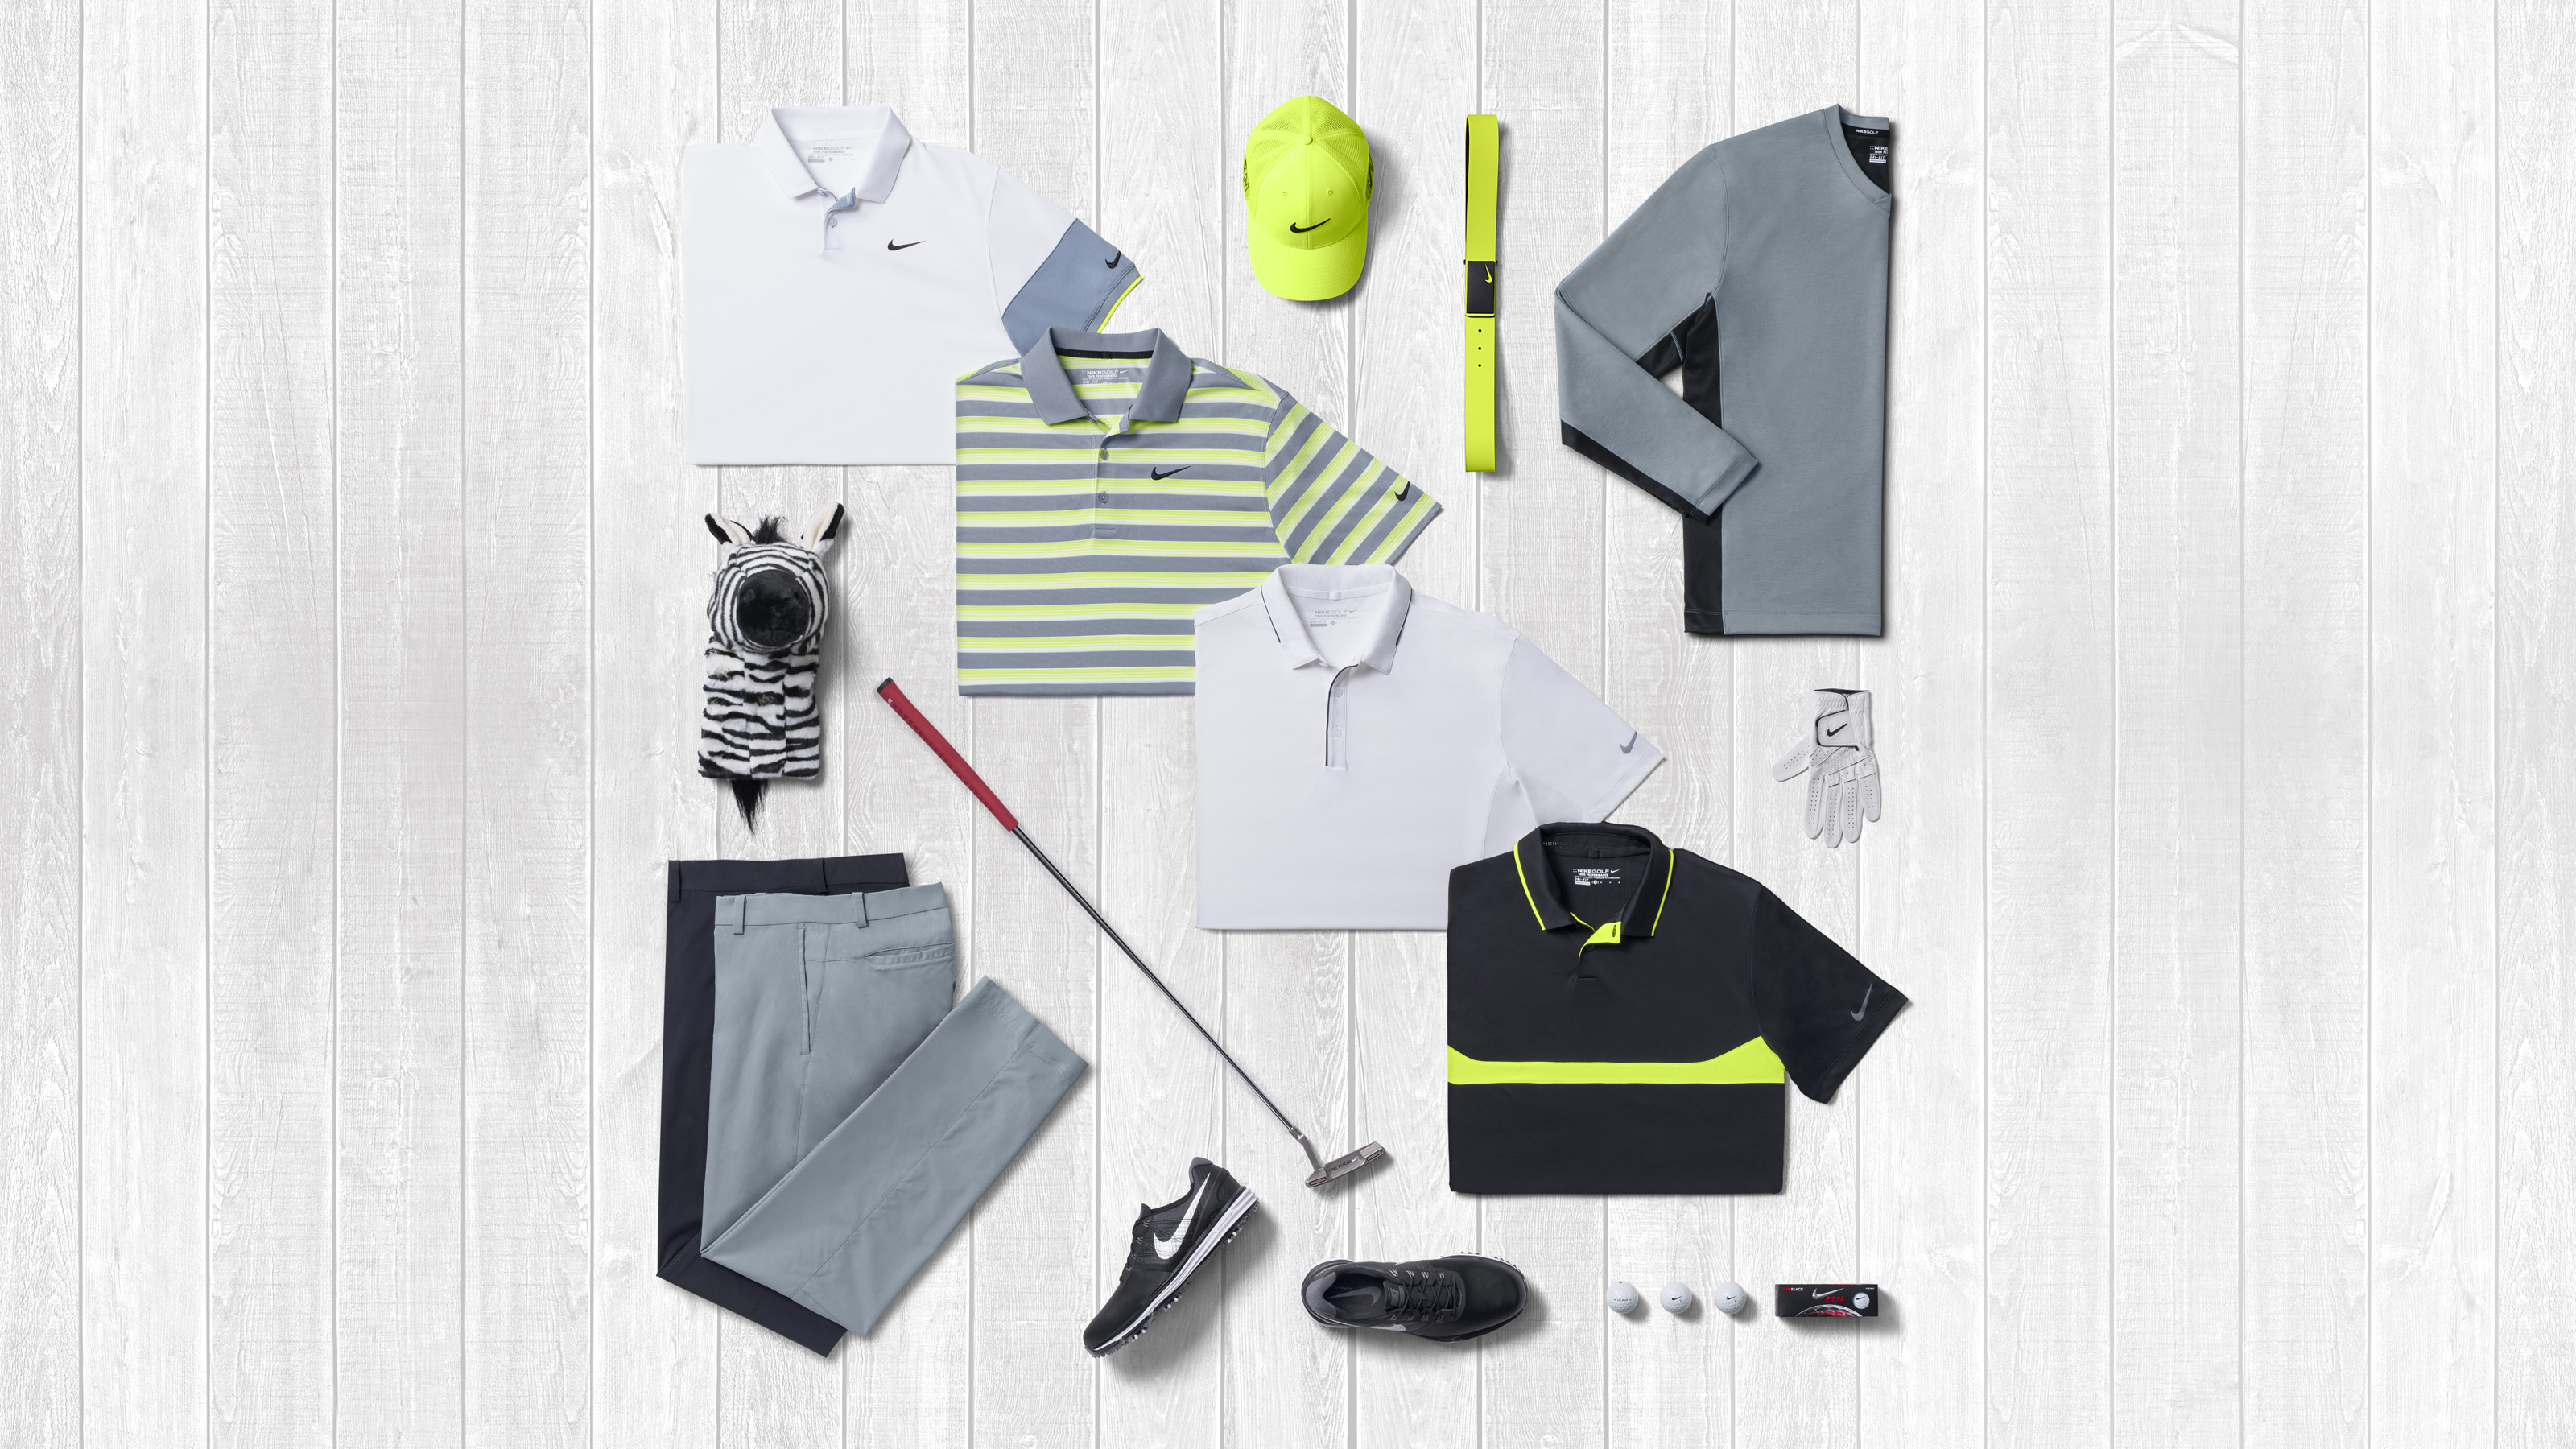 Charl Schwartzel 2015 Major Look - Nike Golf